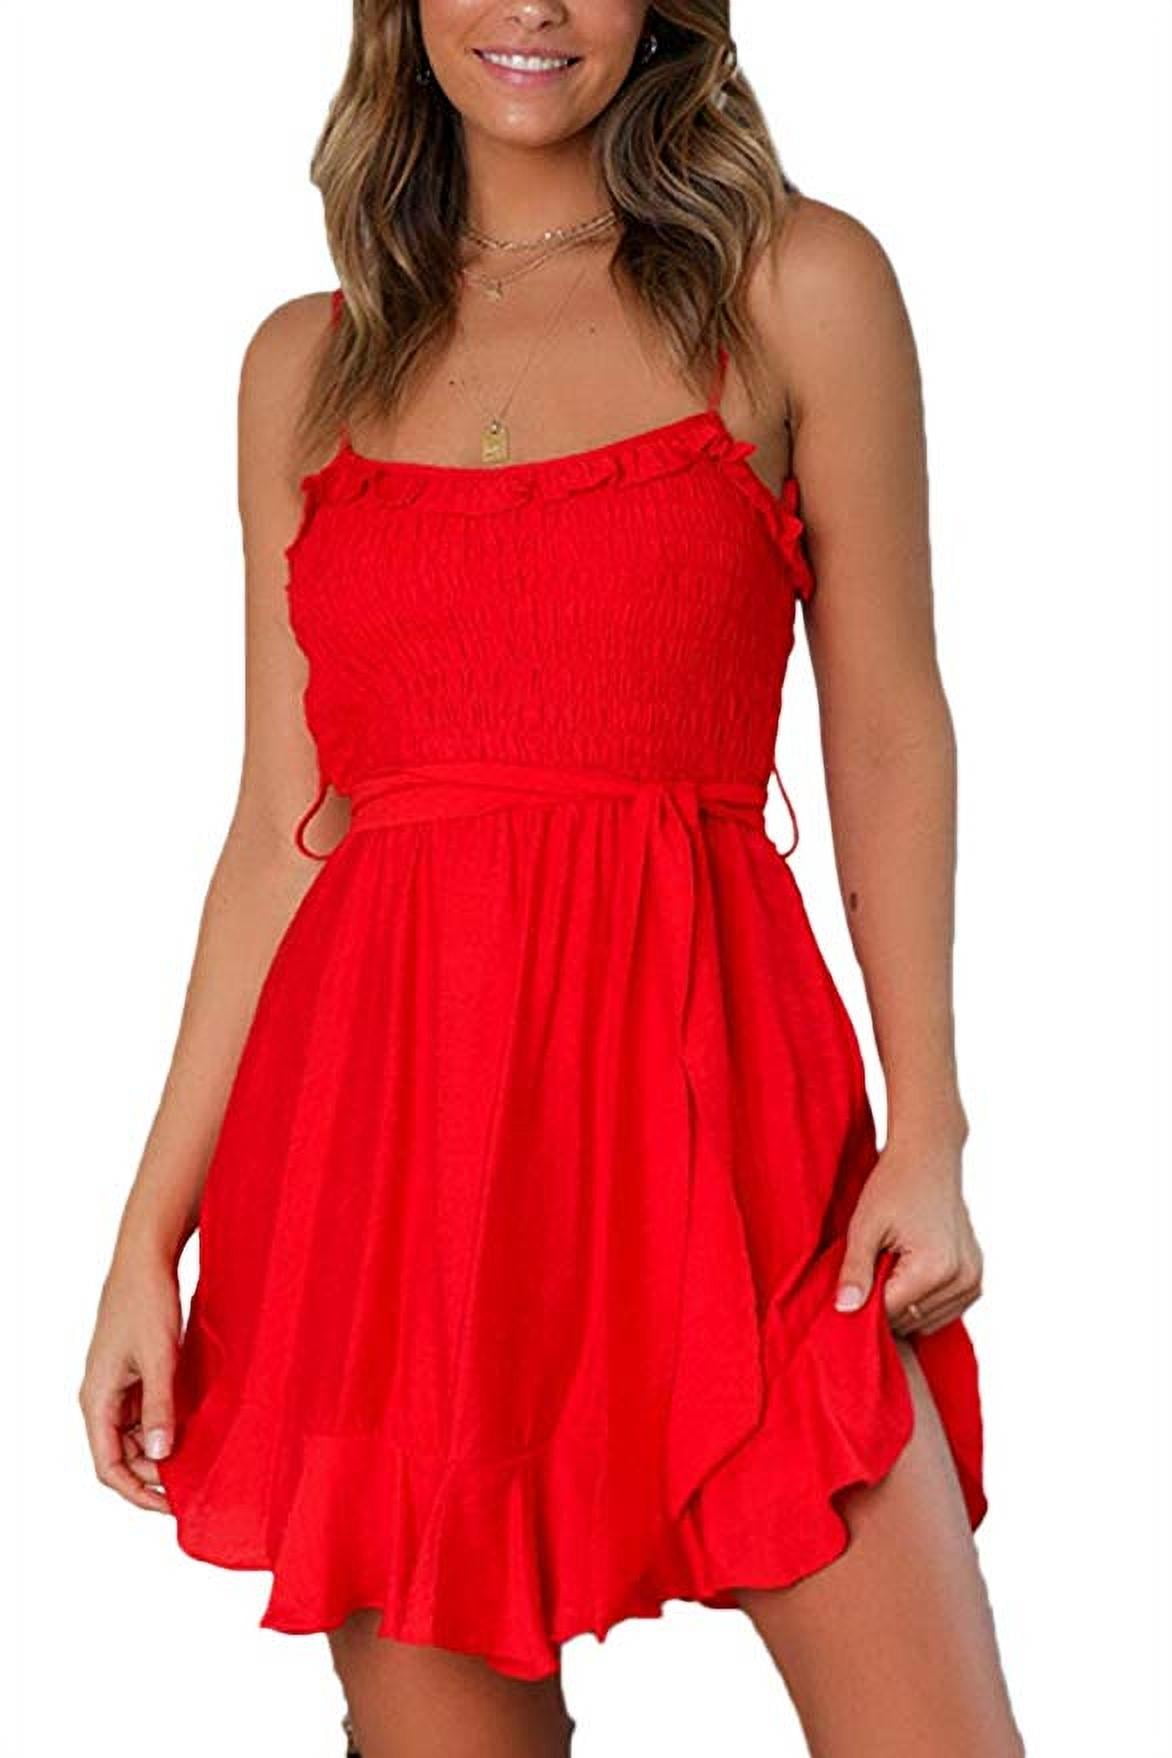 Fonwoon Women S Strapless Dress Mini Summer Tube Top Dresses